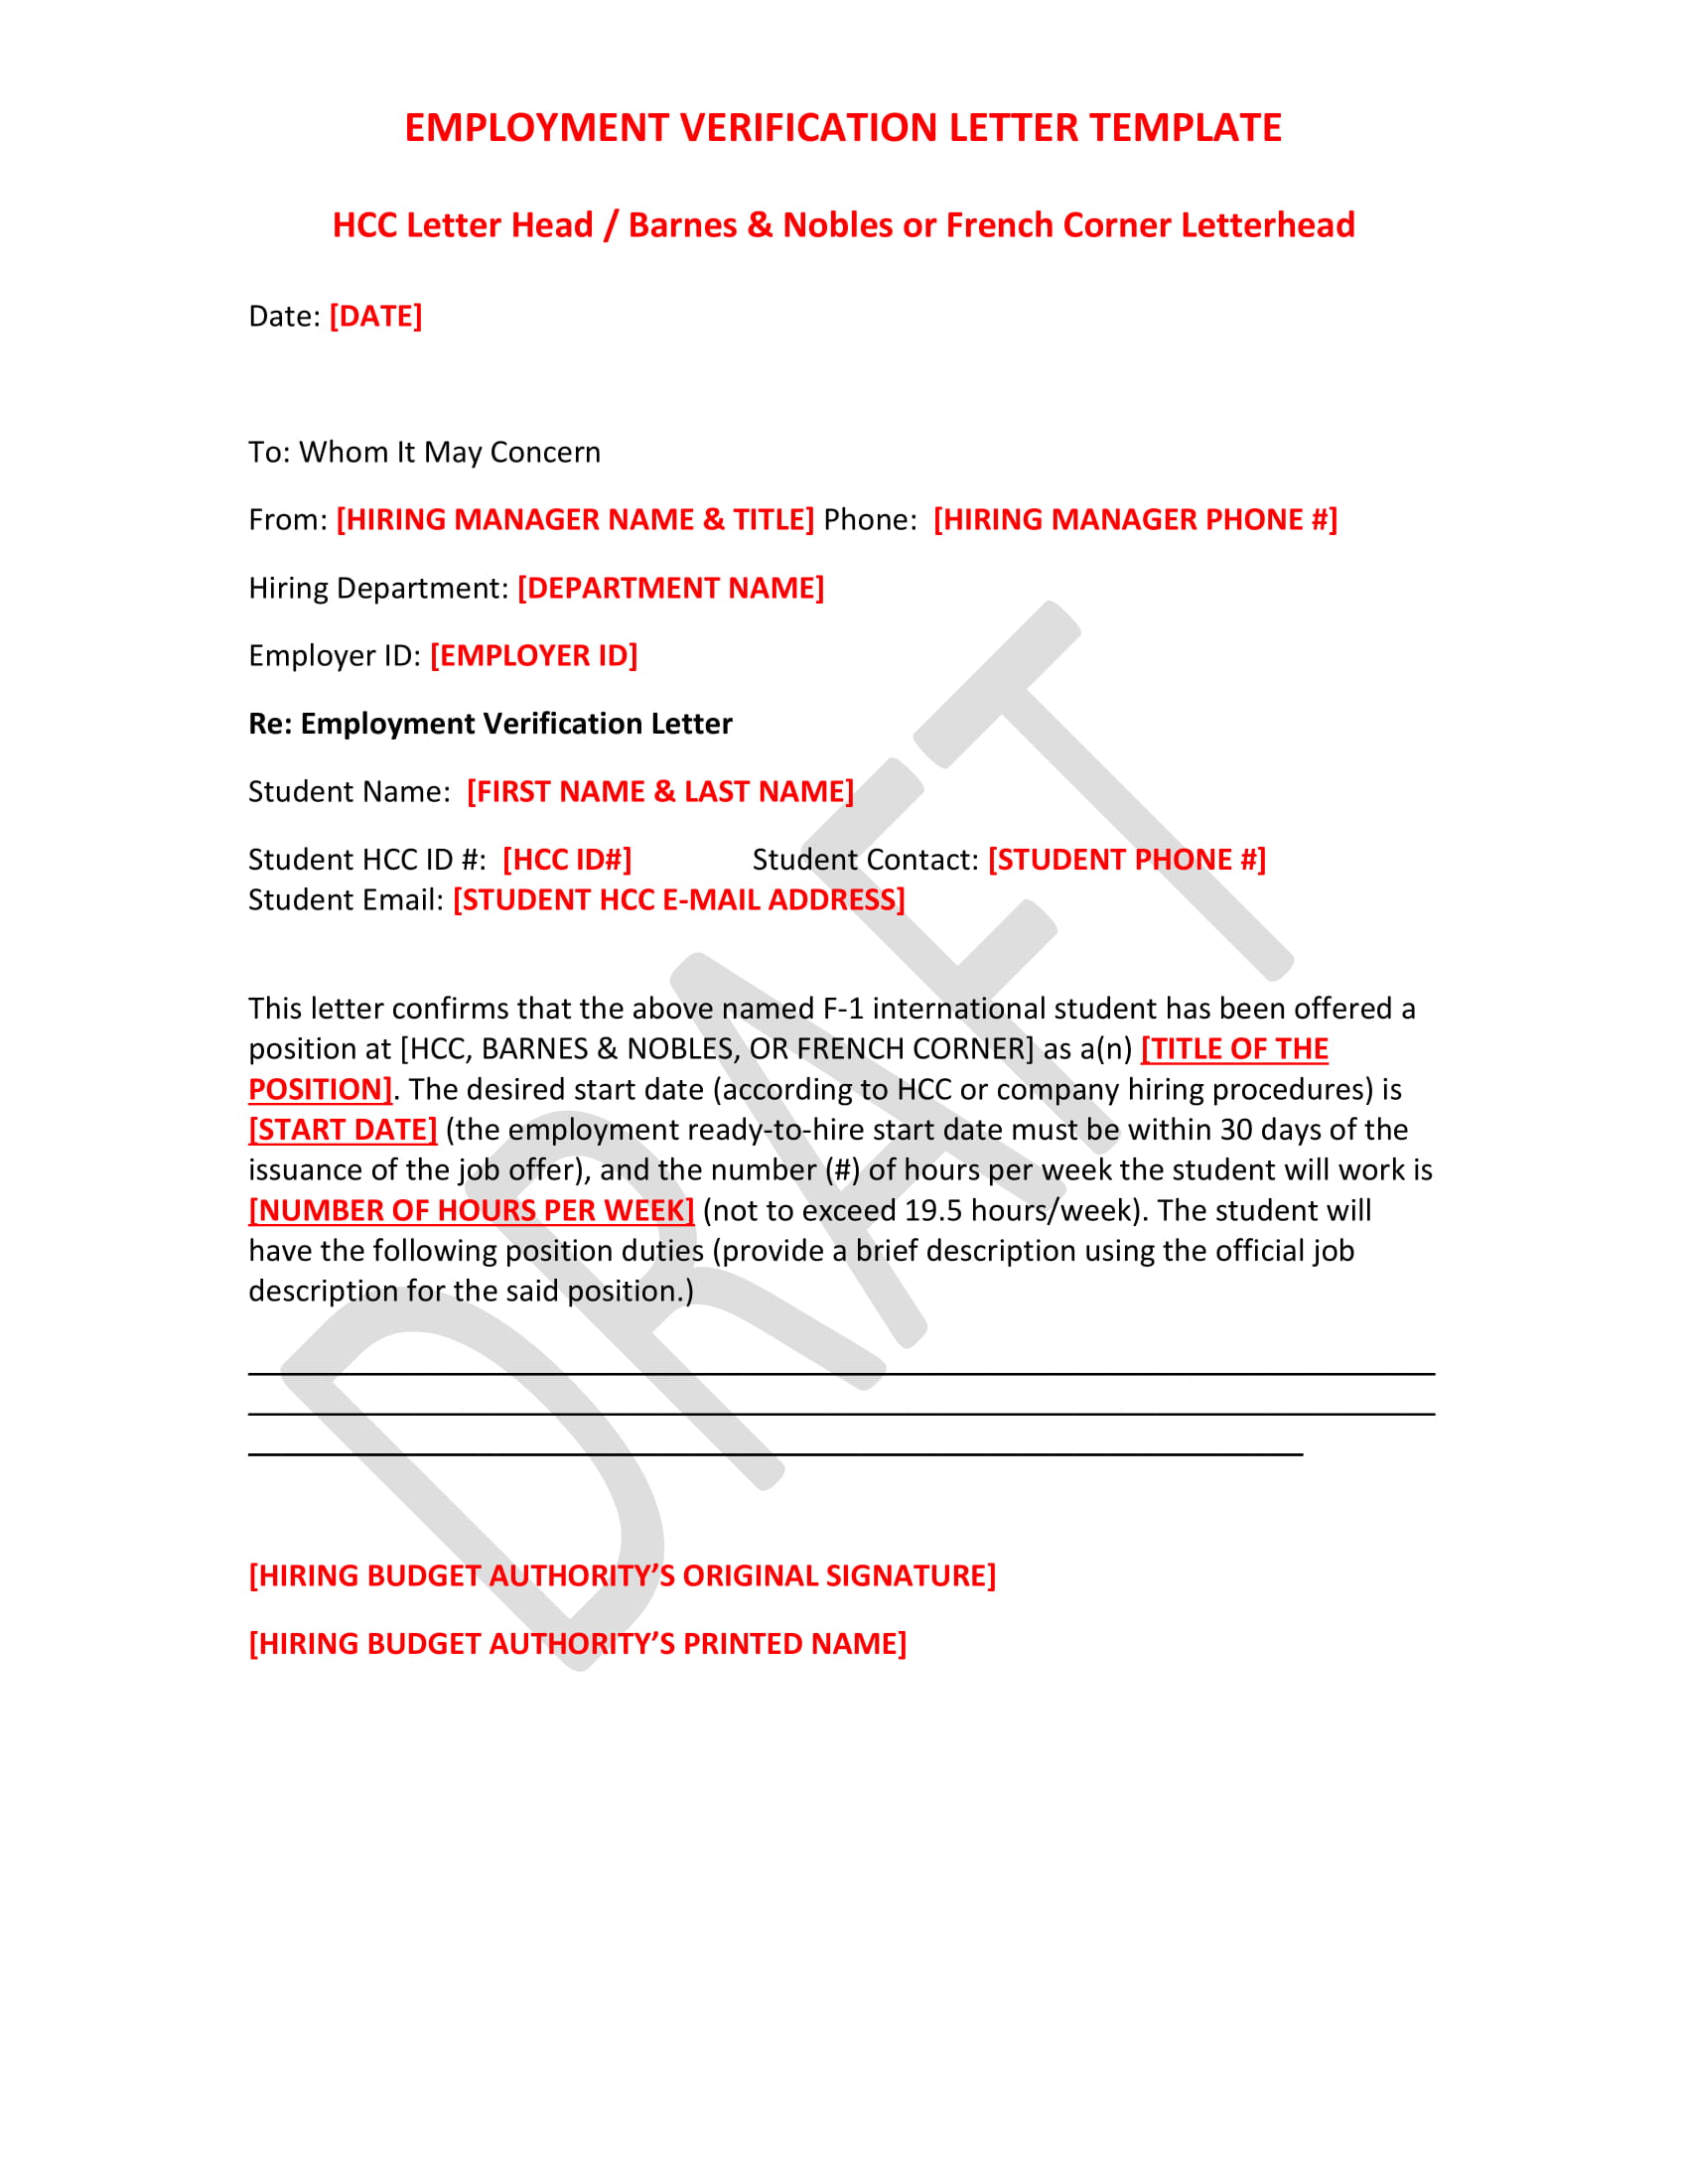 employment verification letter template example